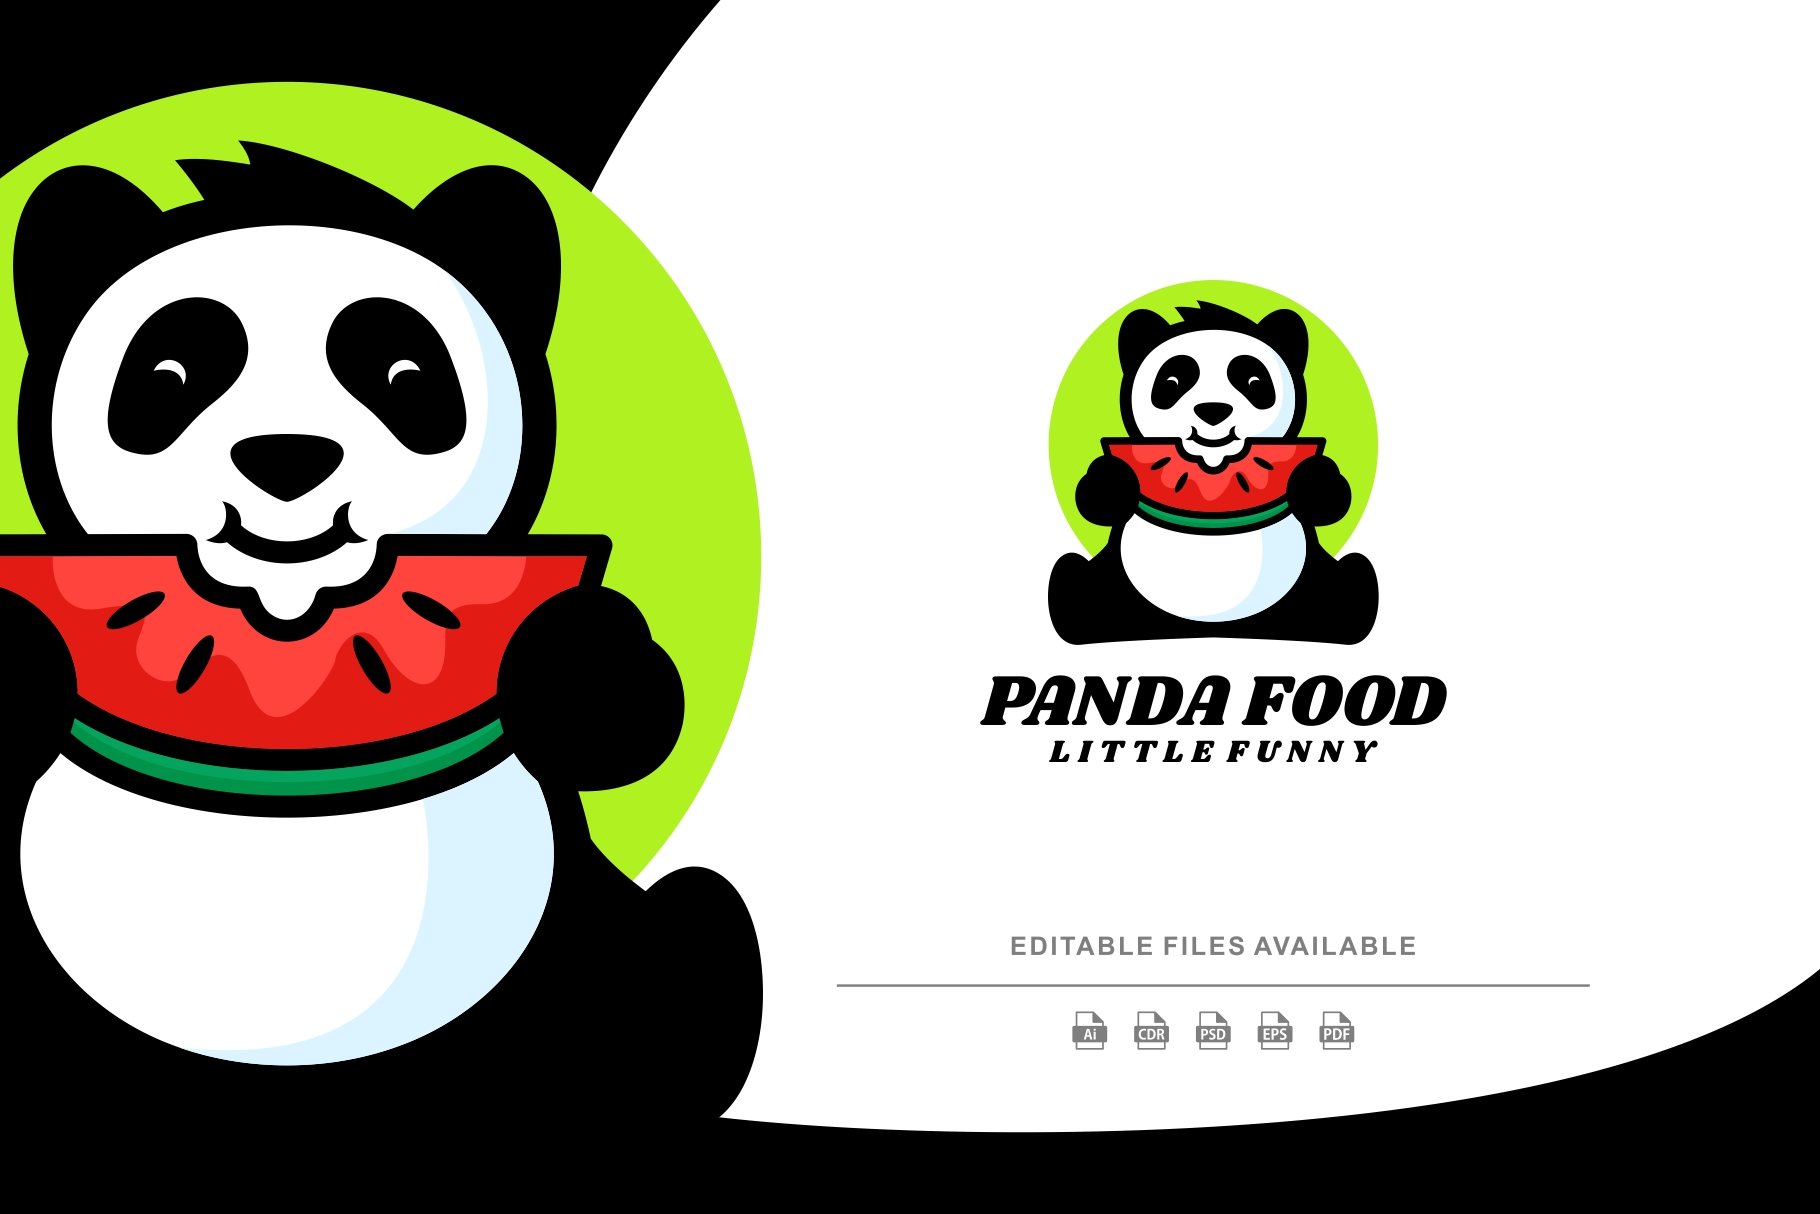 Panda Food Mascot Cartoon Logo cover image.